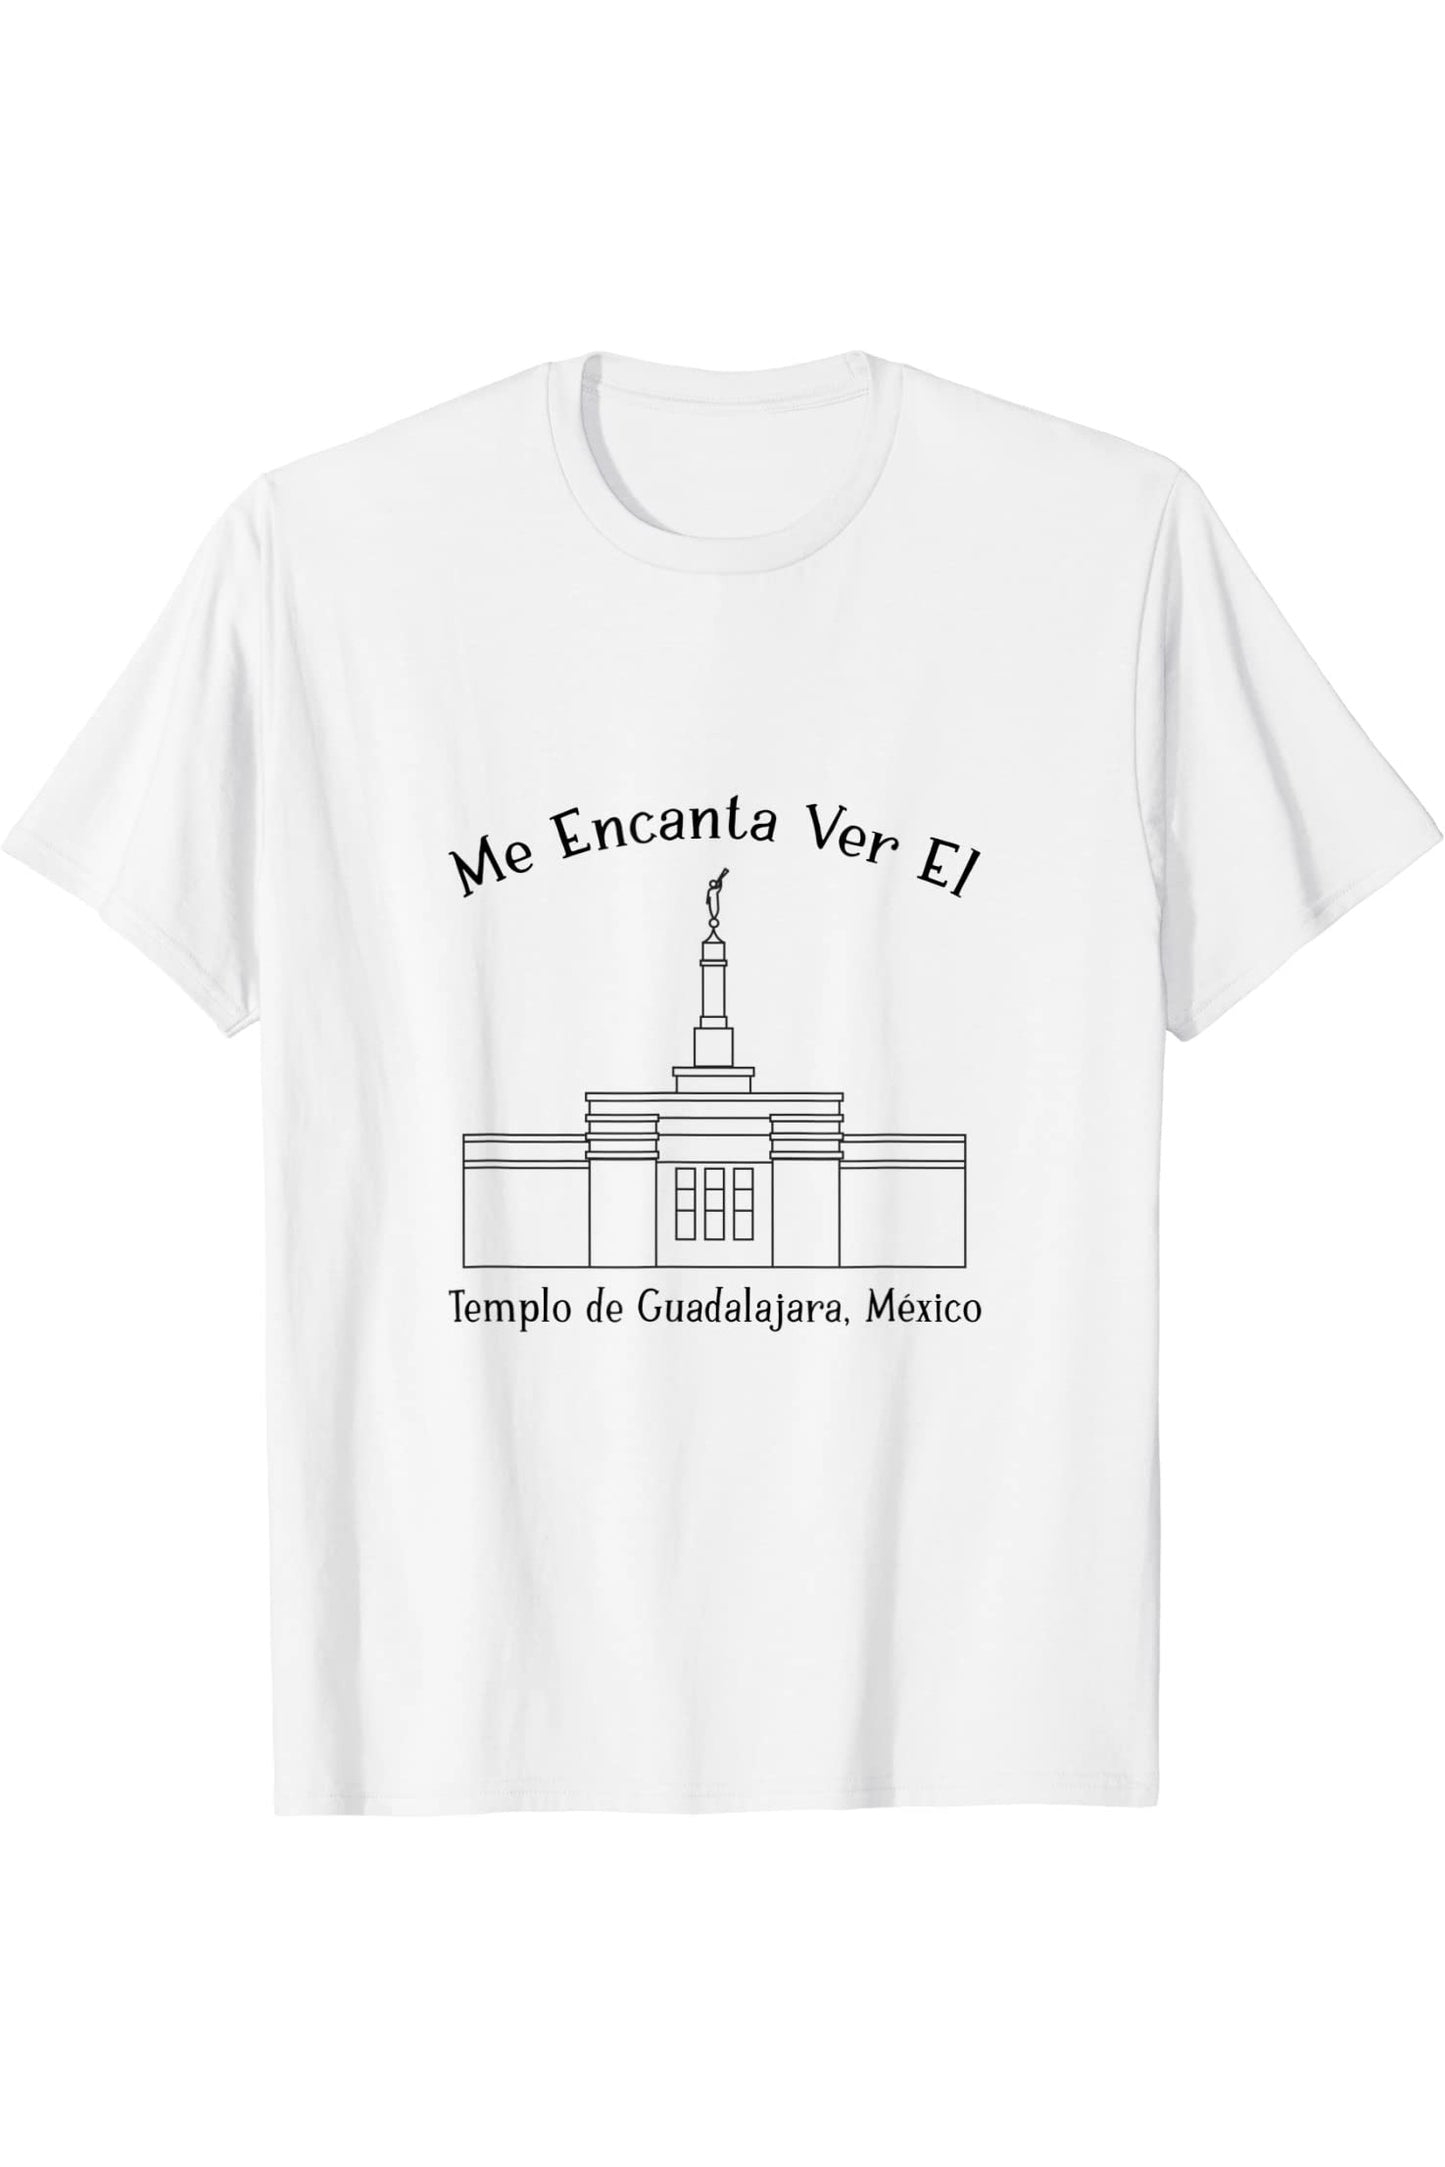 Guadalajara Mexico Temple T-Shirt - Happy Style (Spanish) US